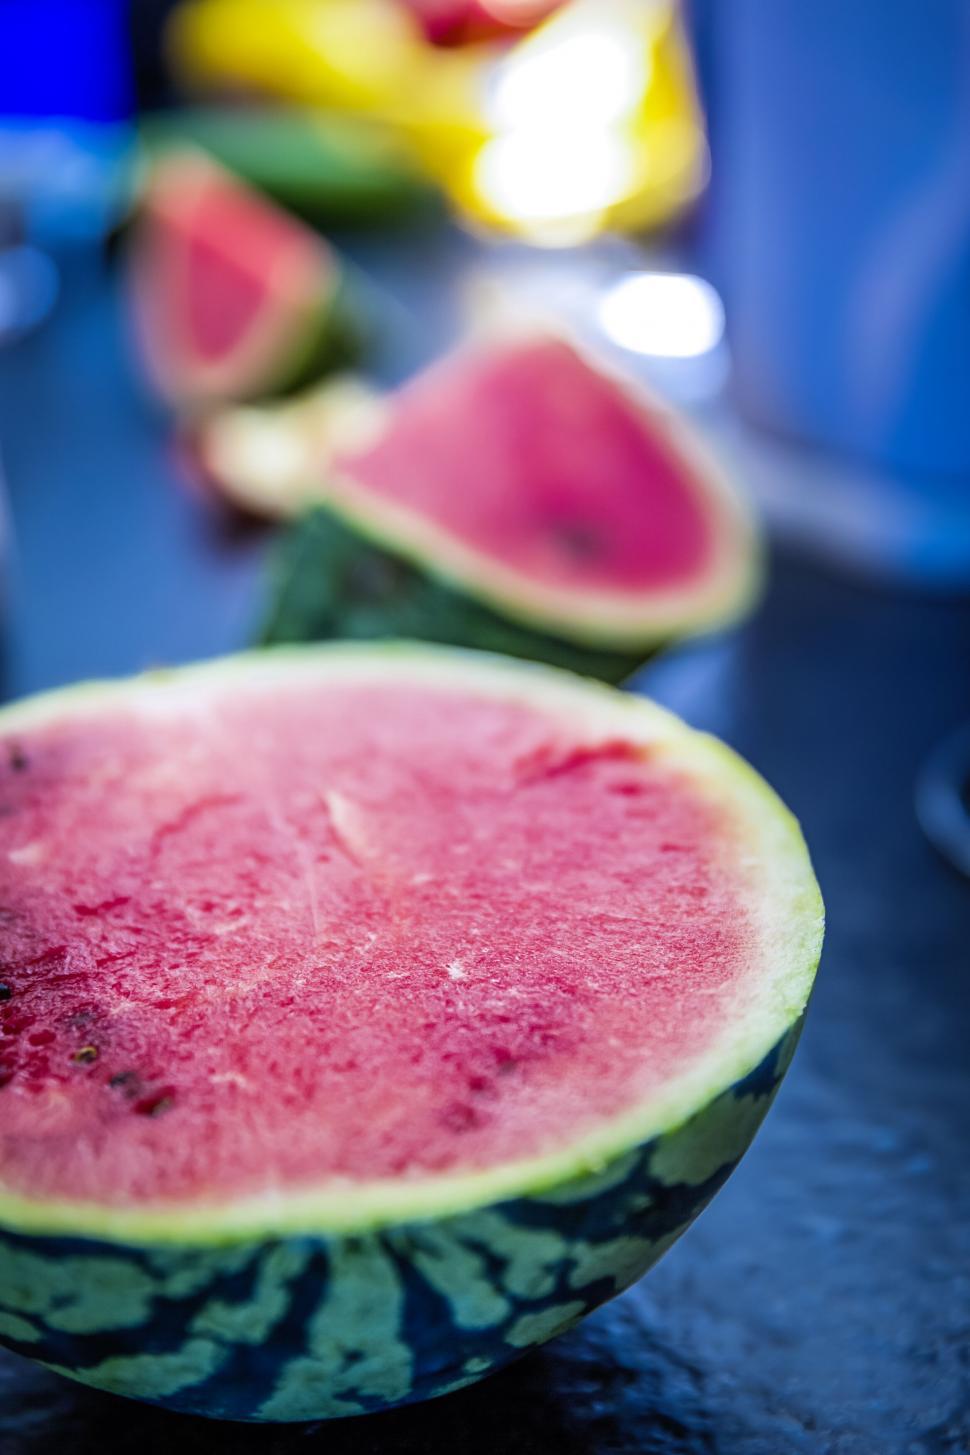 Free Image of Fresh juicy watermelon close-up shot 